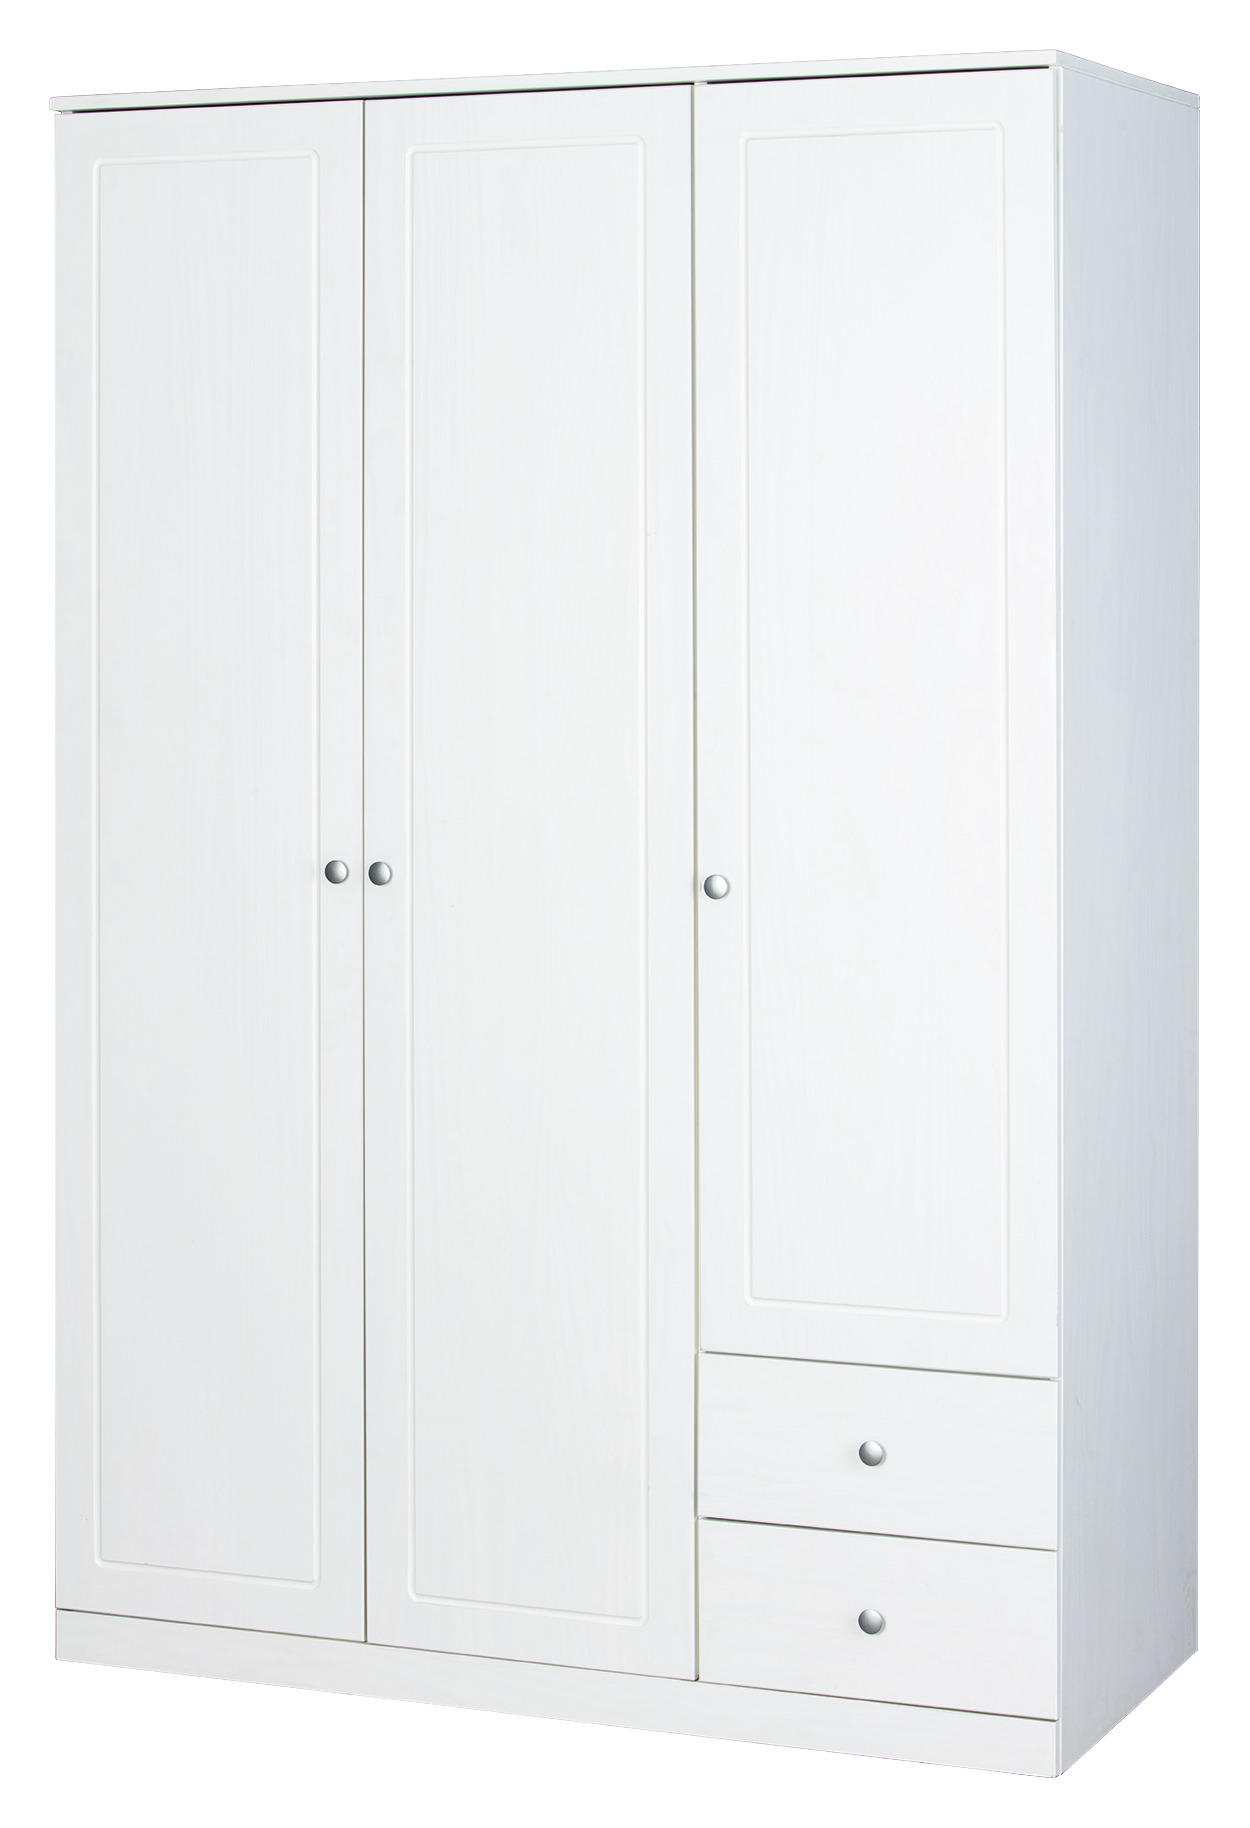 KLEIDERSCHRANK 3-türig Kiefer massiv Weiß  - Weiß/Grau, KONVENTIONELL, Holz/Metall (138/205/63cm) - MID.YOU